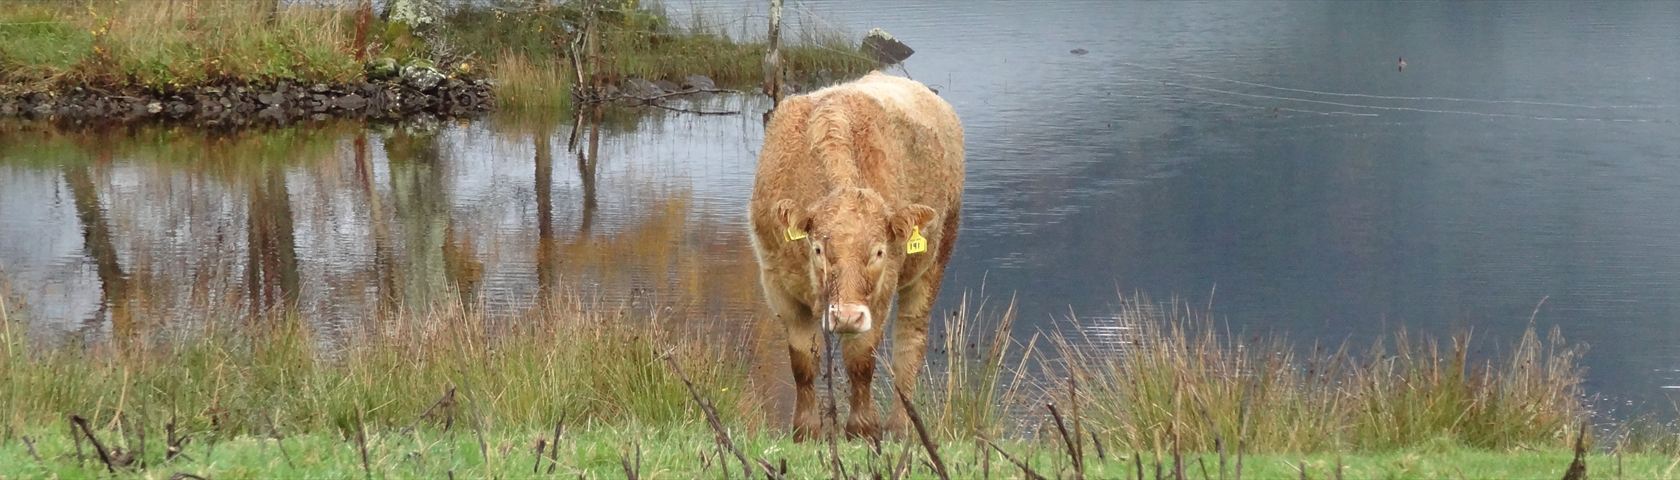 Cow Near Water